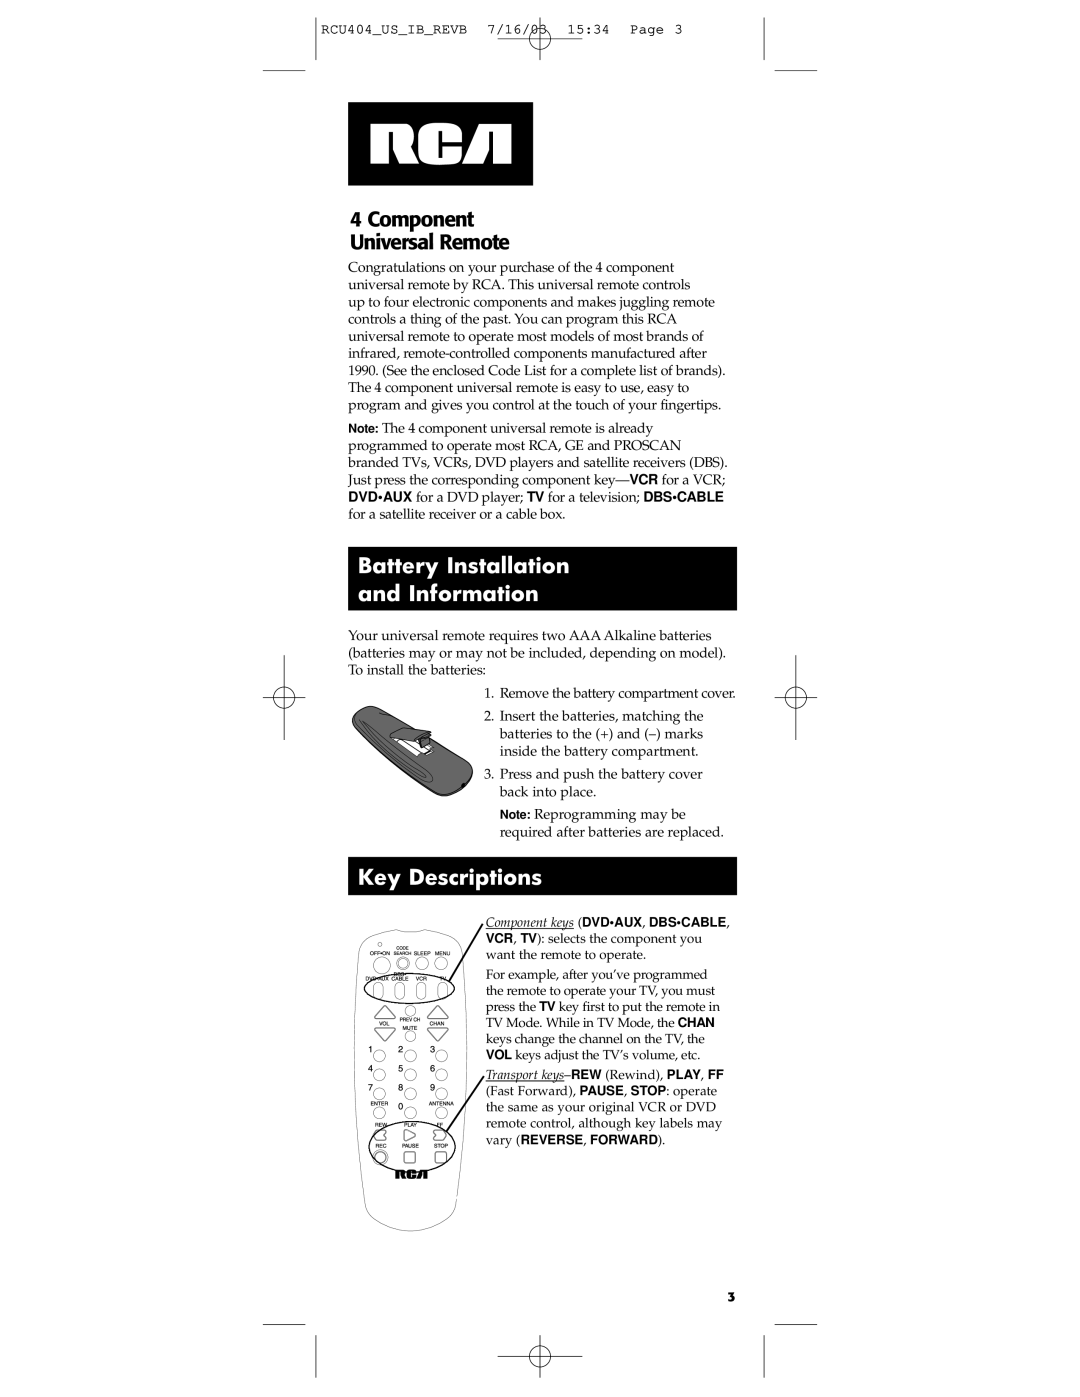 RCA RCU404 manual Battery Installation Information, Key Descriptions 